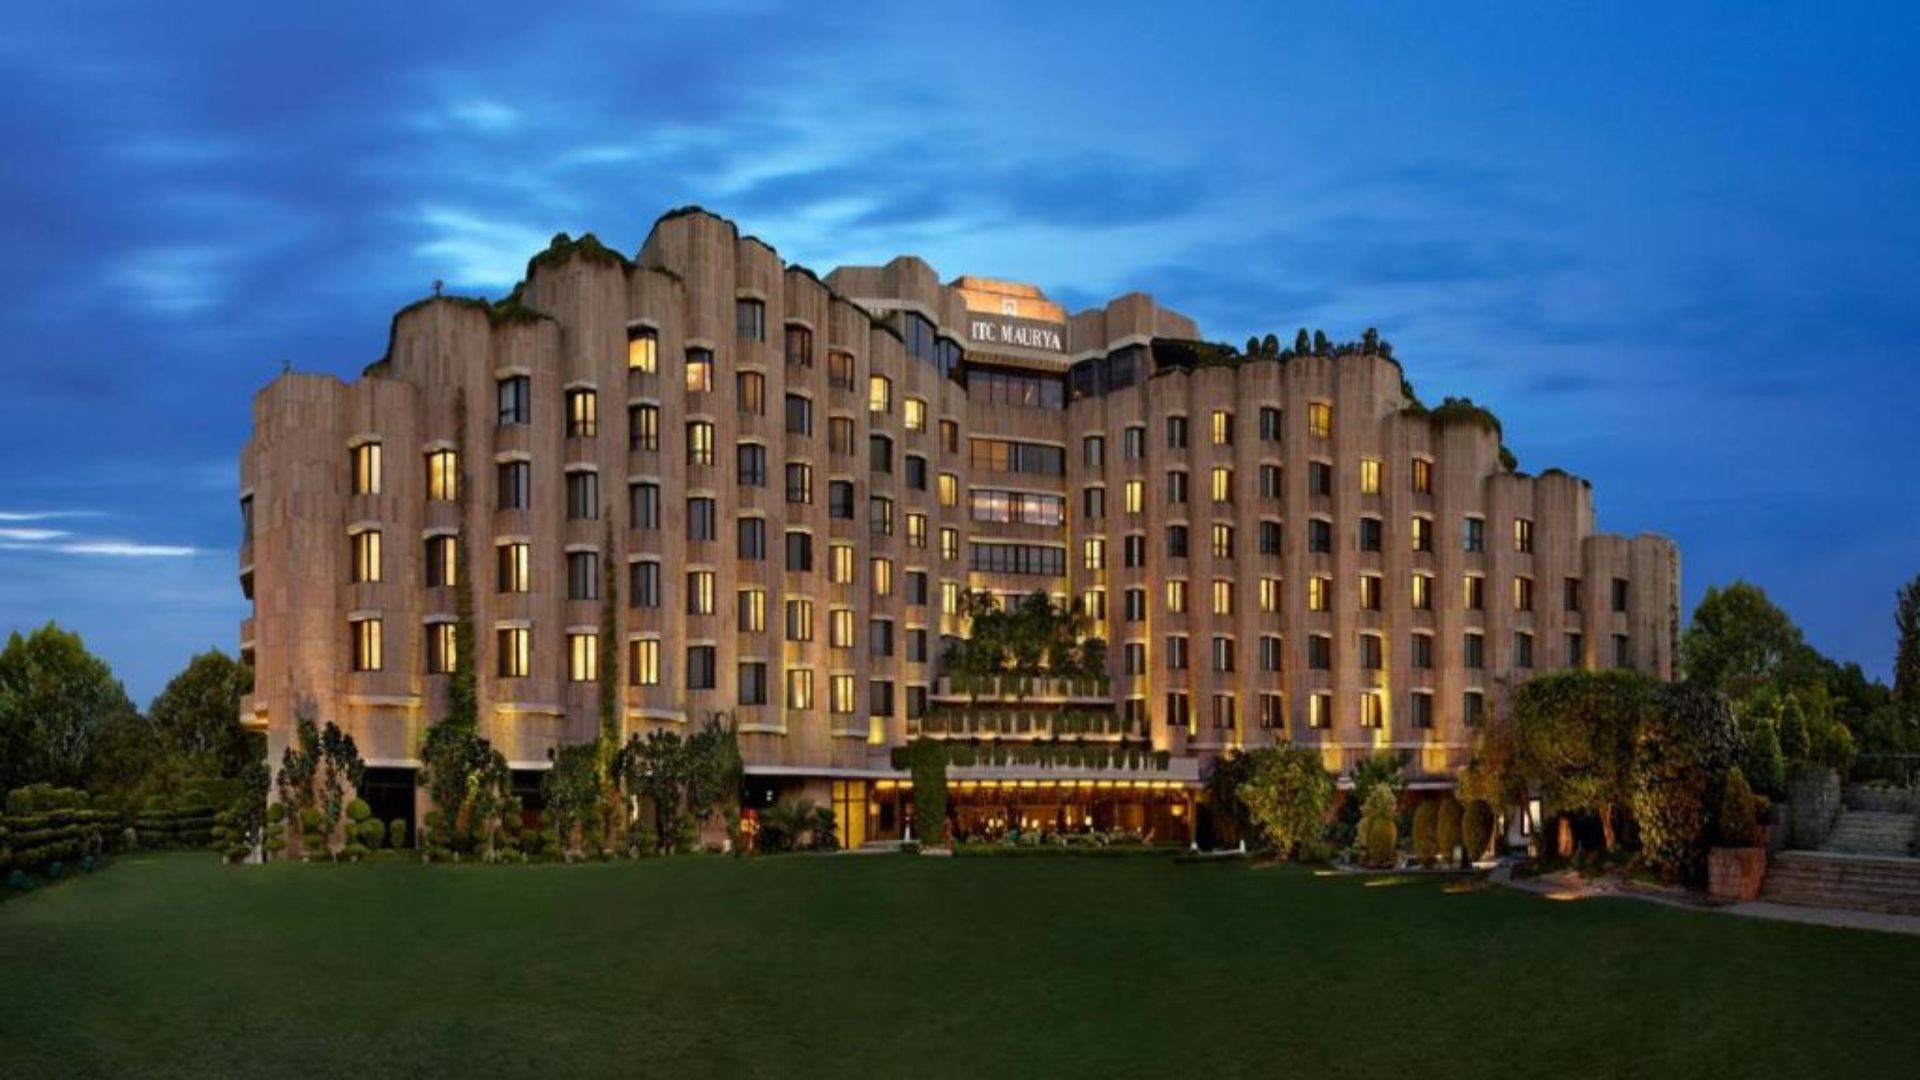 delhi tourism hotels online booking